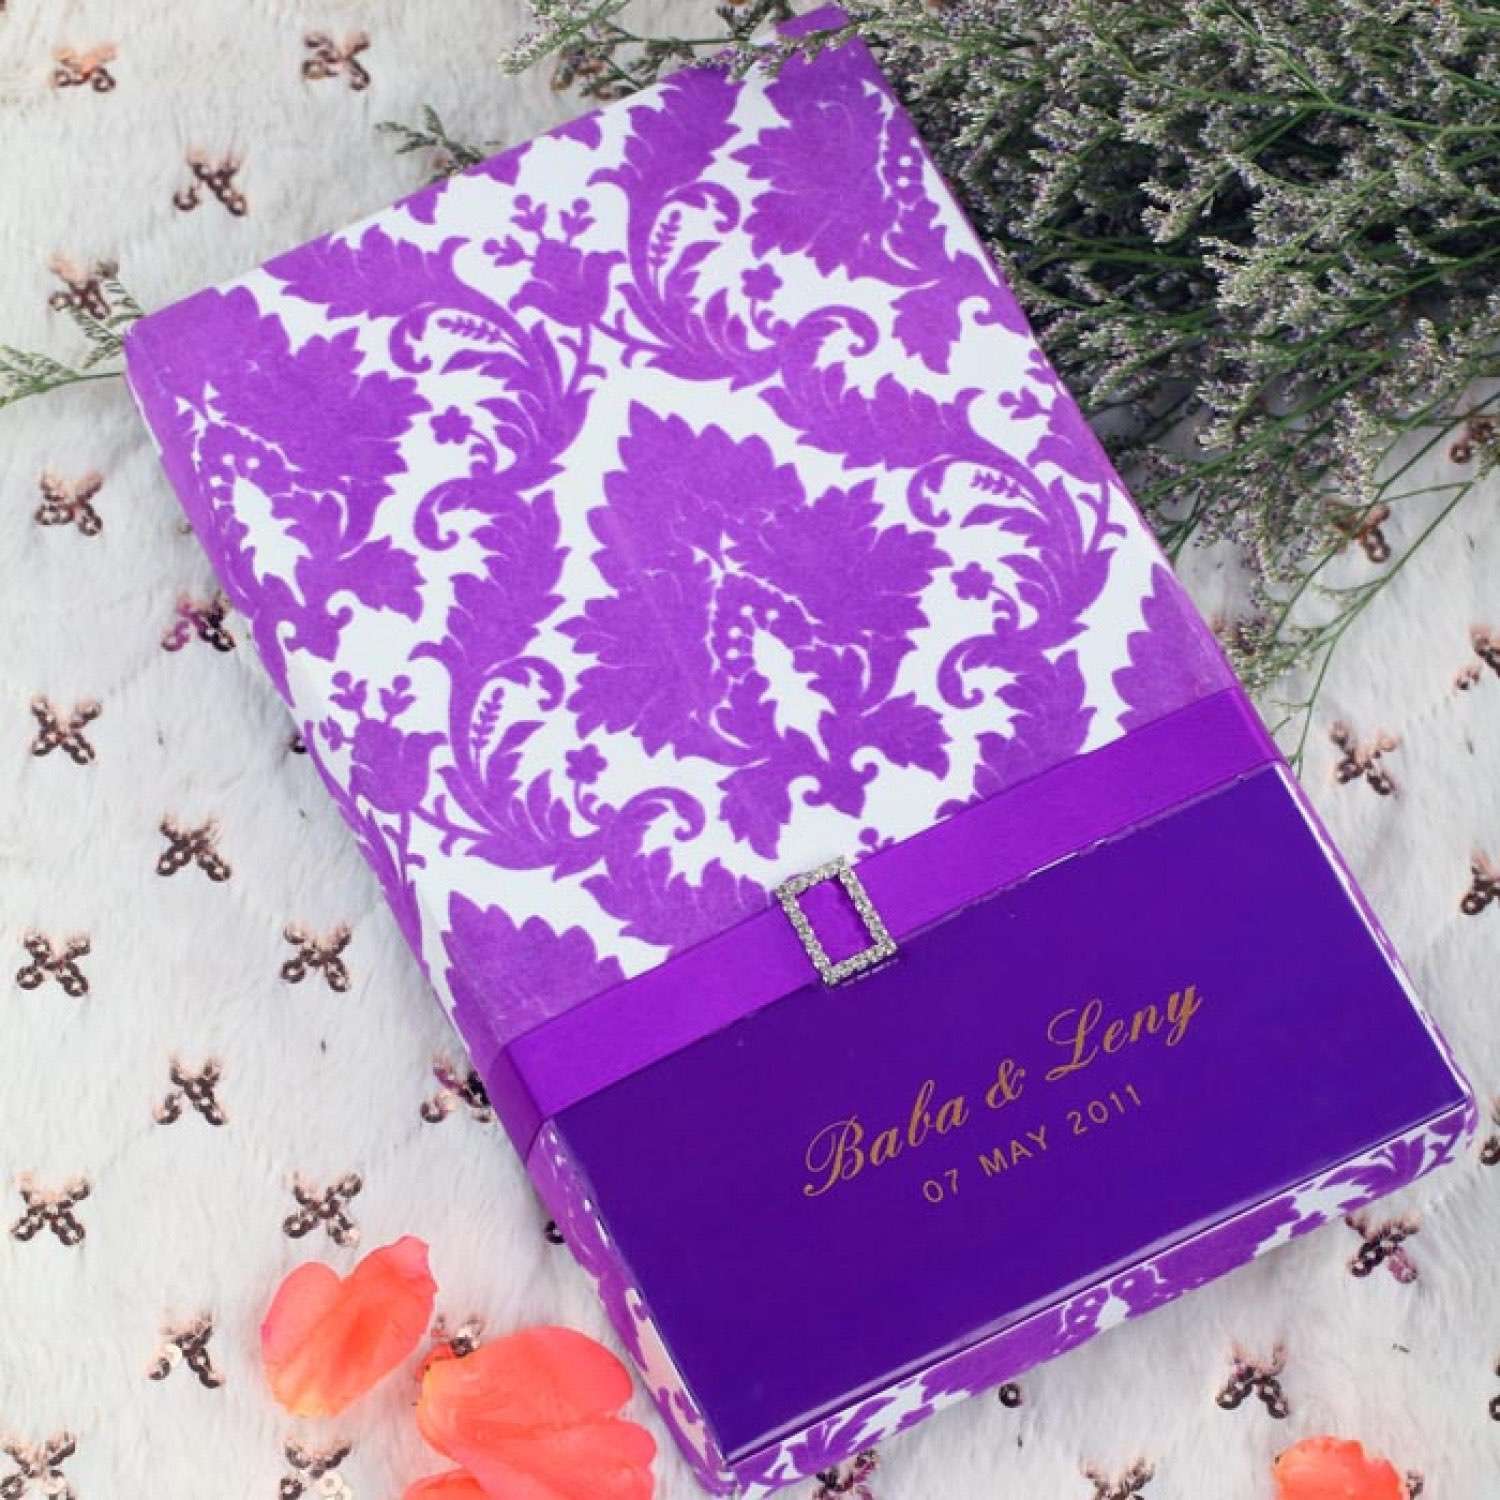 Purple Flocking Invitation Card with Box Wedding Invitation Card Customized 